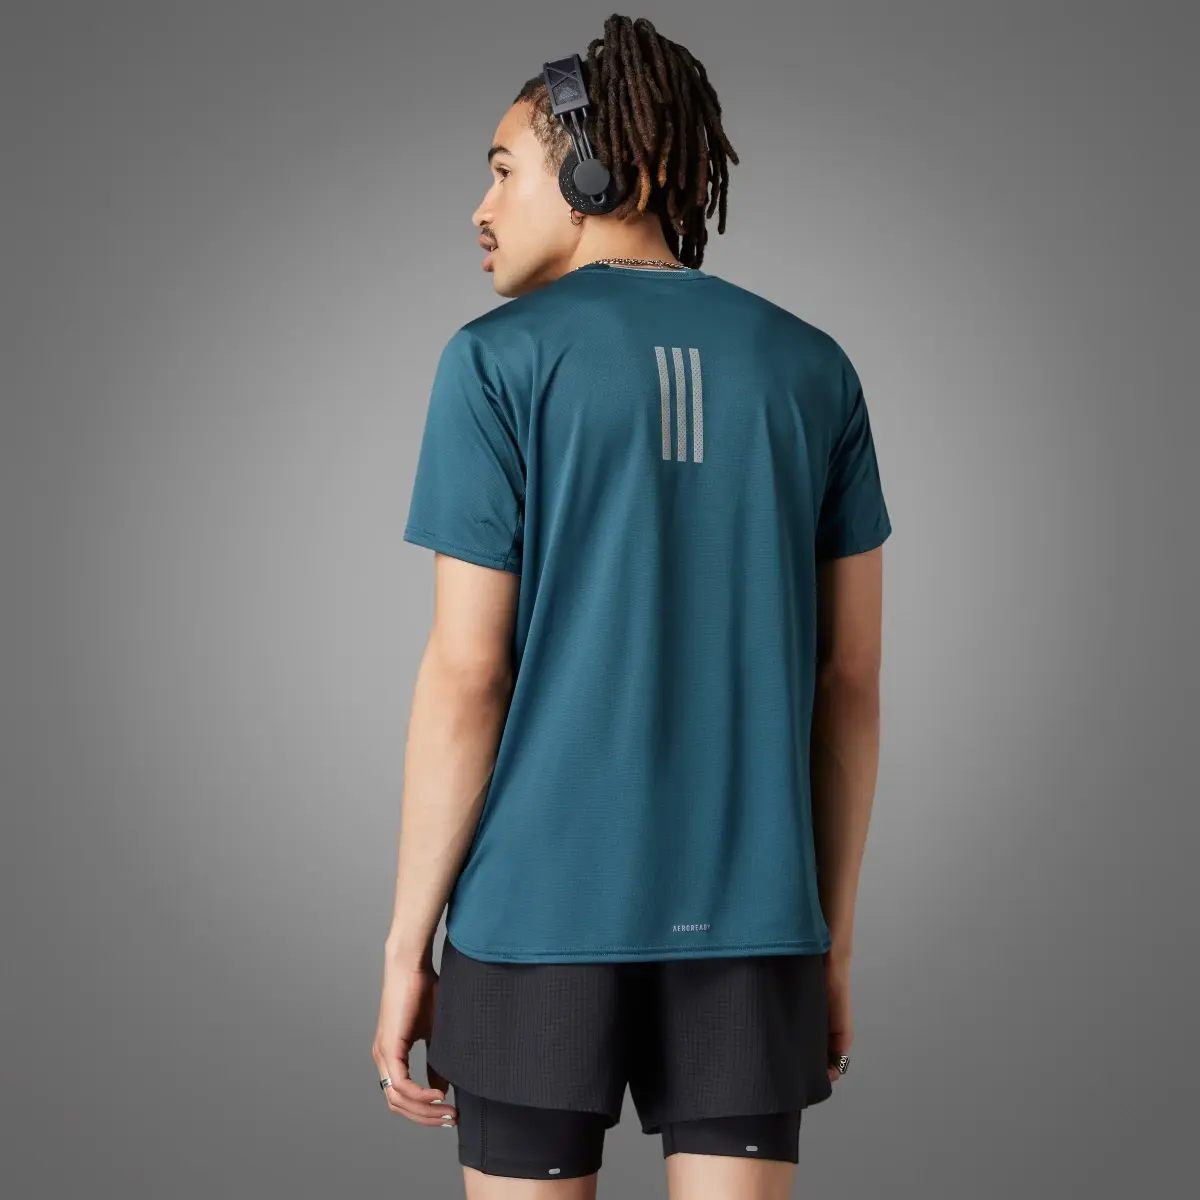 Adidas T-shirt Designed 4 Running. 2